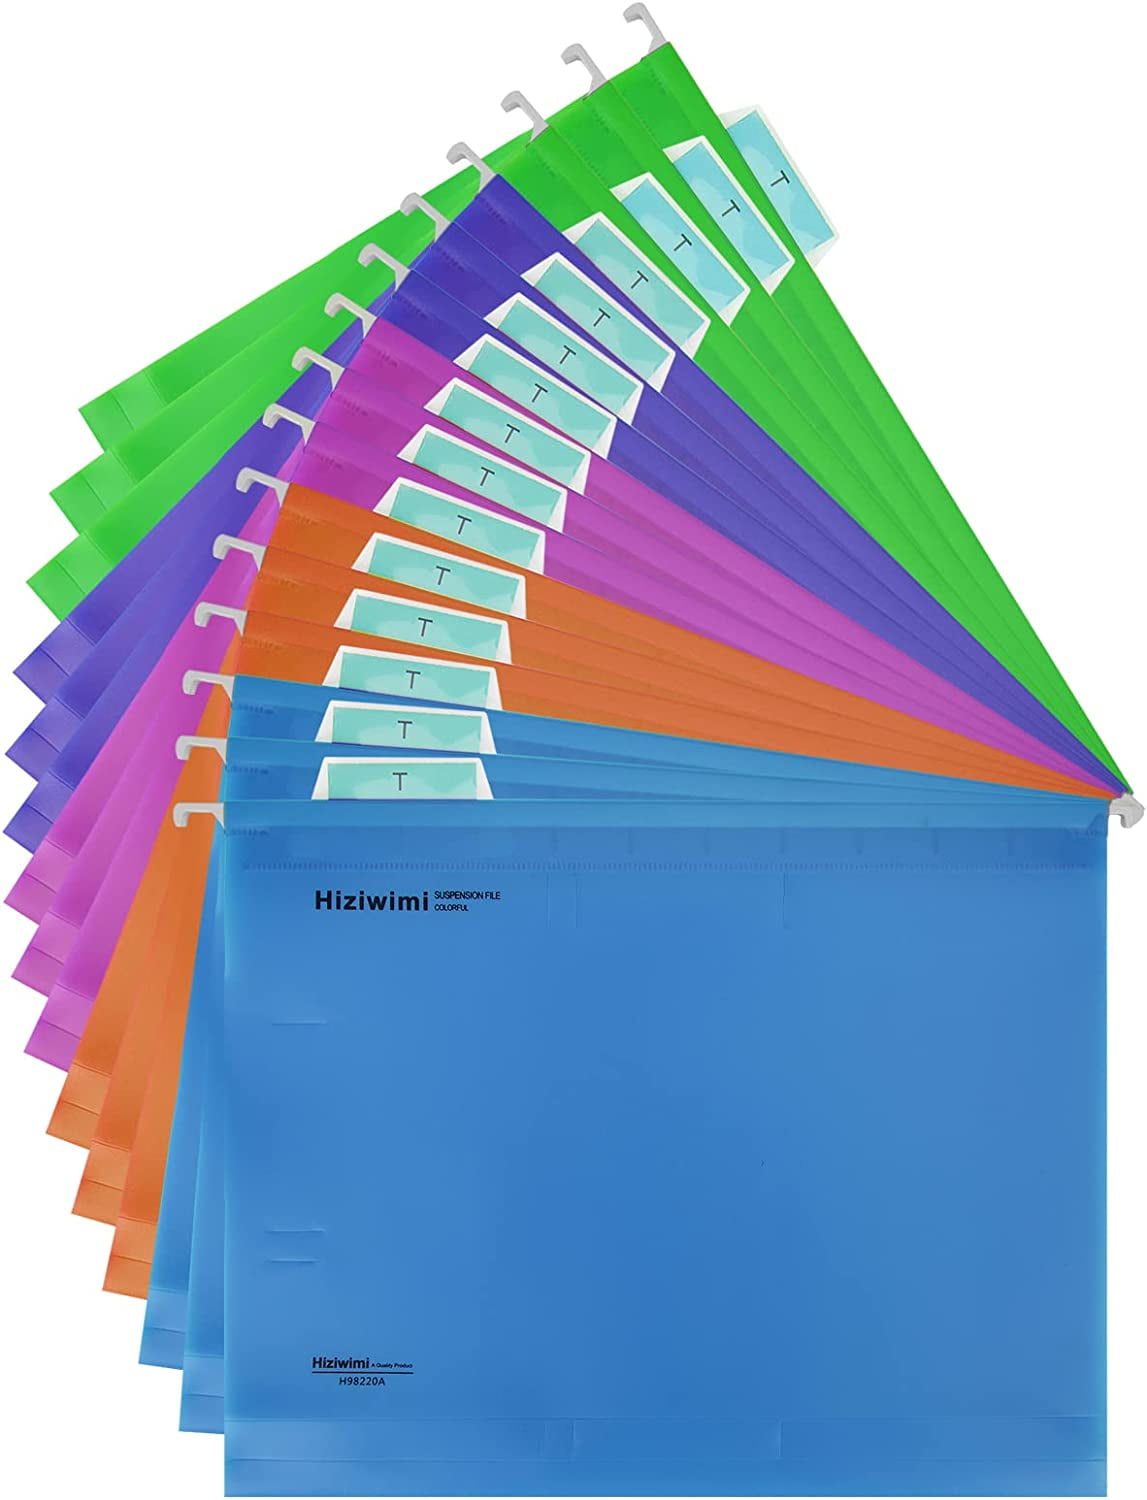 Iris USA Medium Portable Desktop File Box, Clear - 6 Pack, Side Handles, Hanging File Folders, Tabs & Inserts, Letter Size